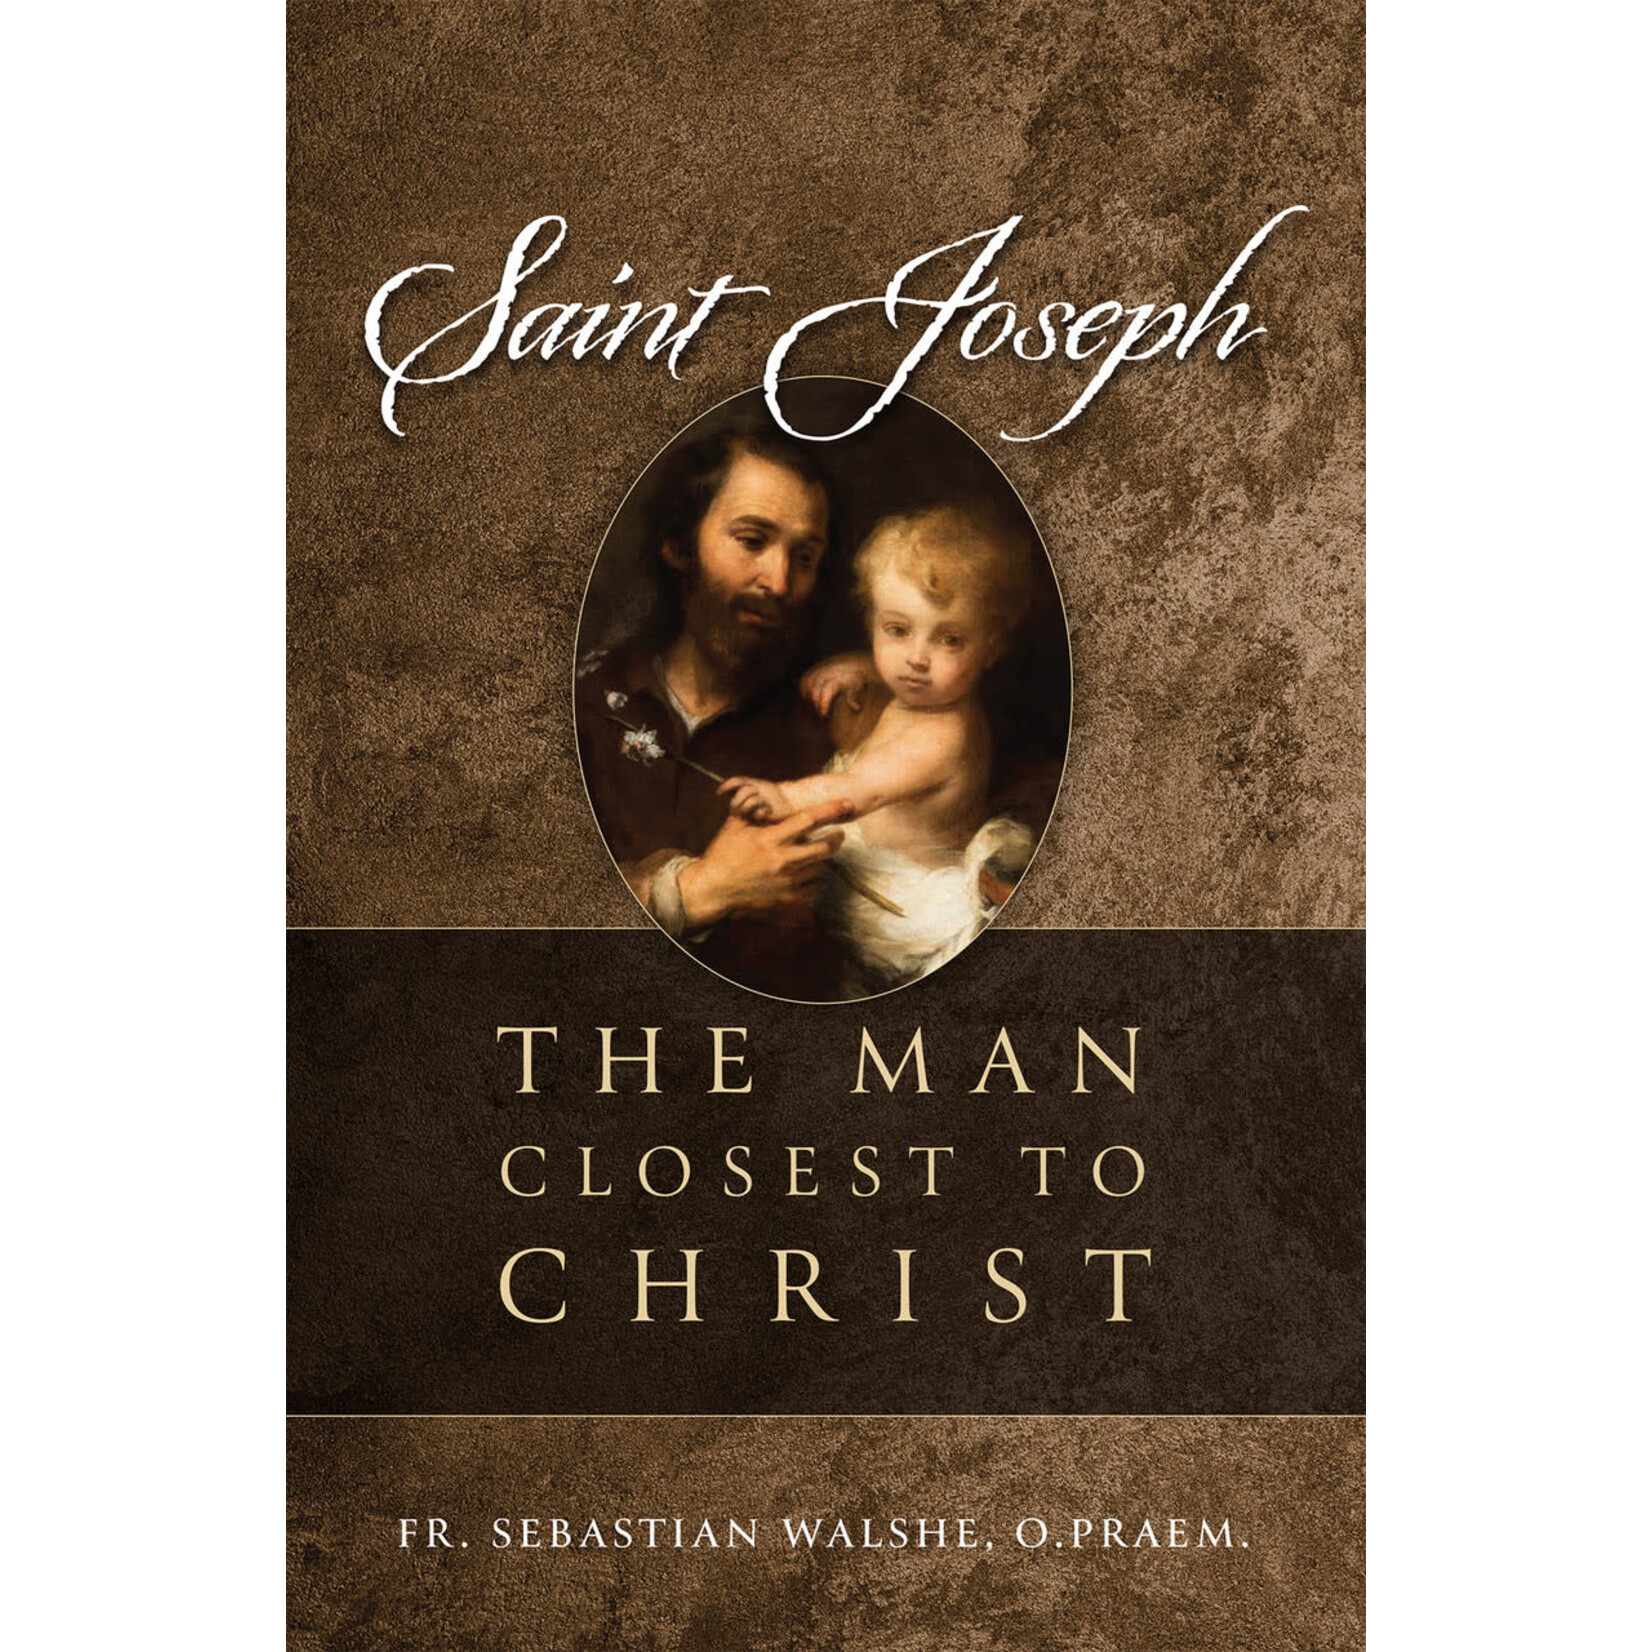 Saint Joseph, The Man Closest to Christ